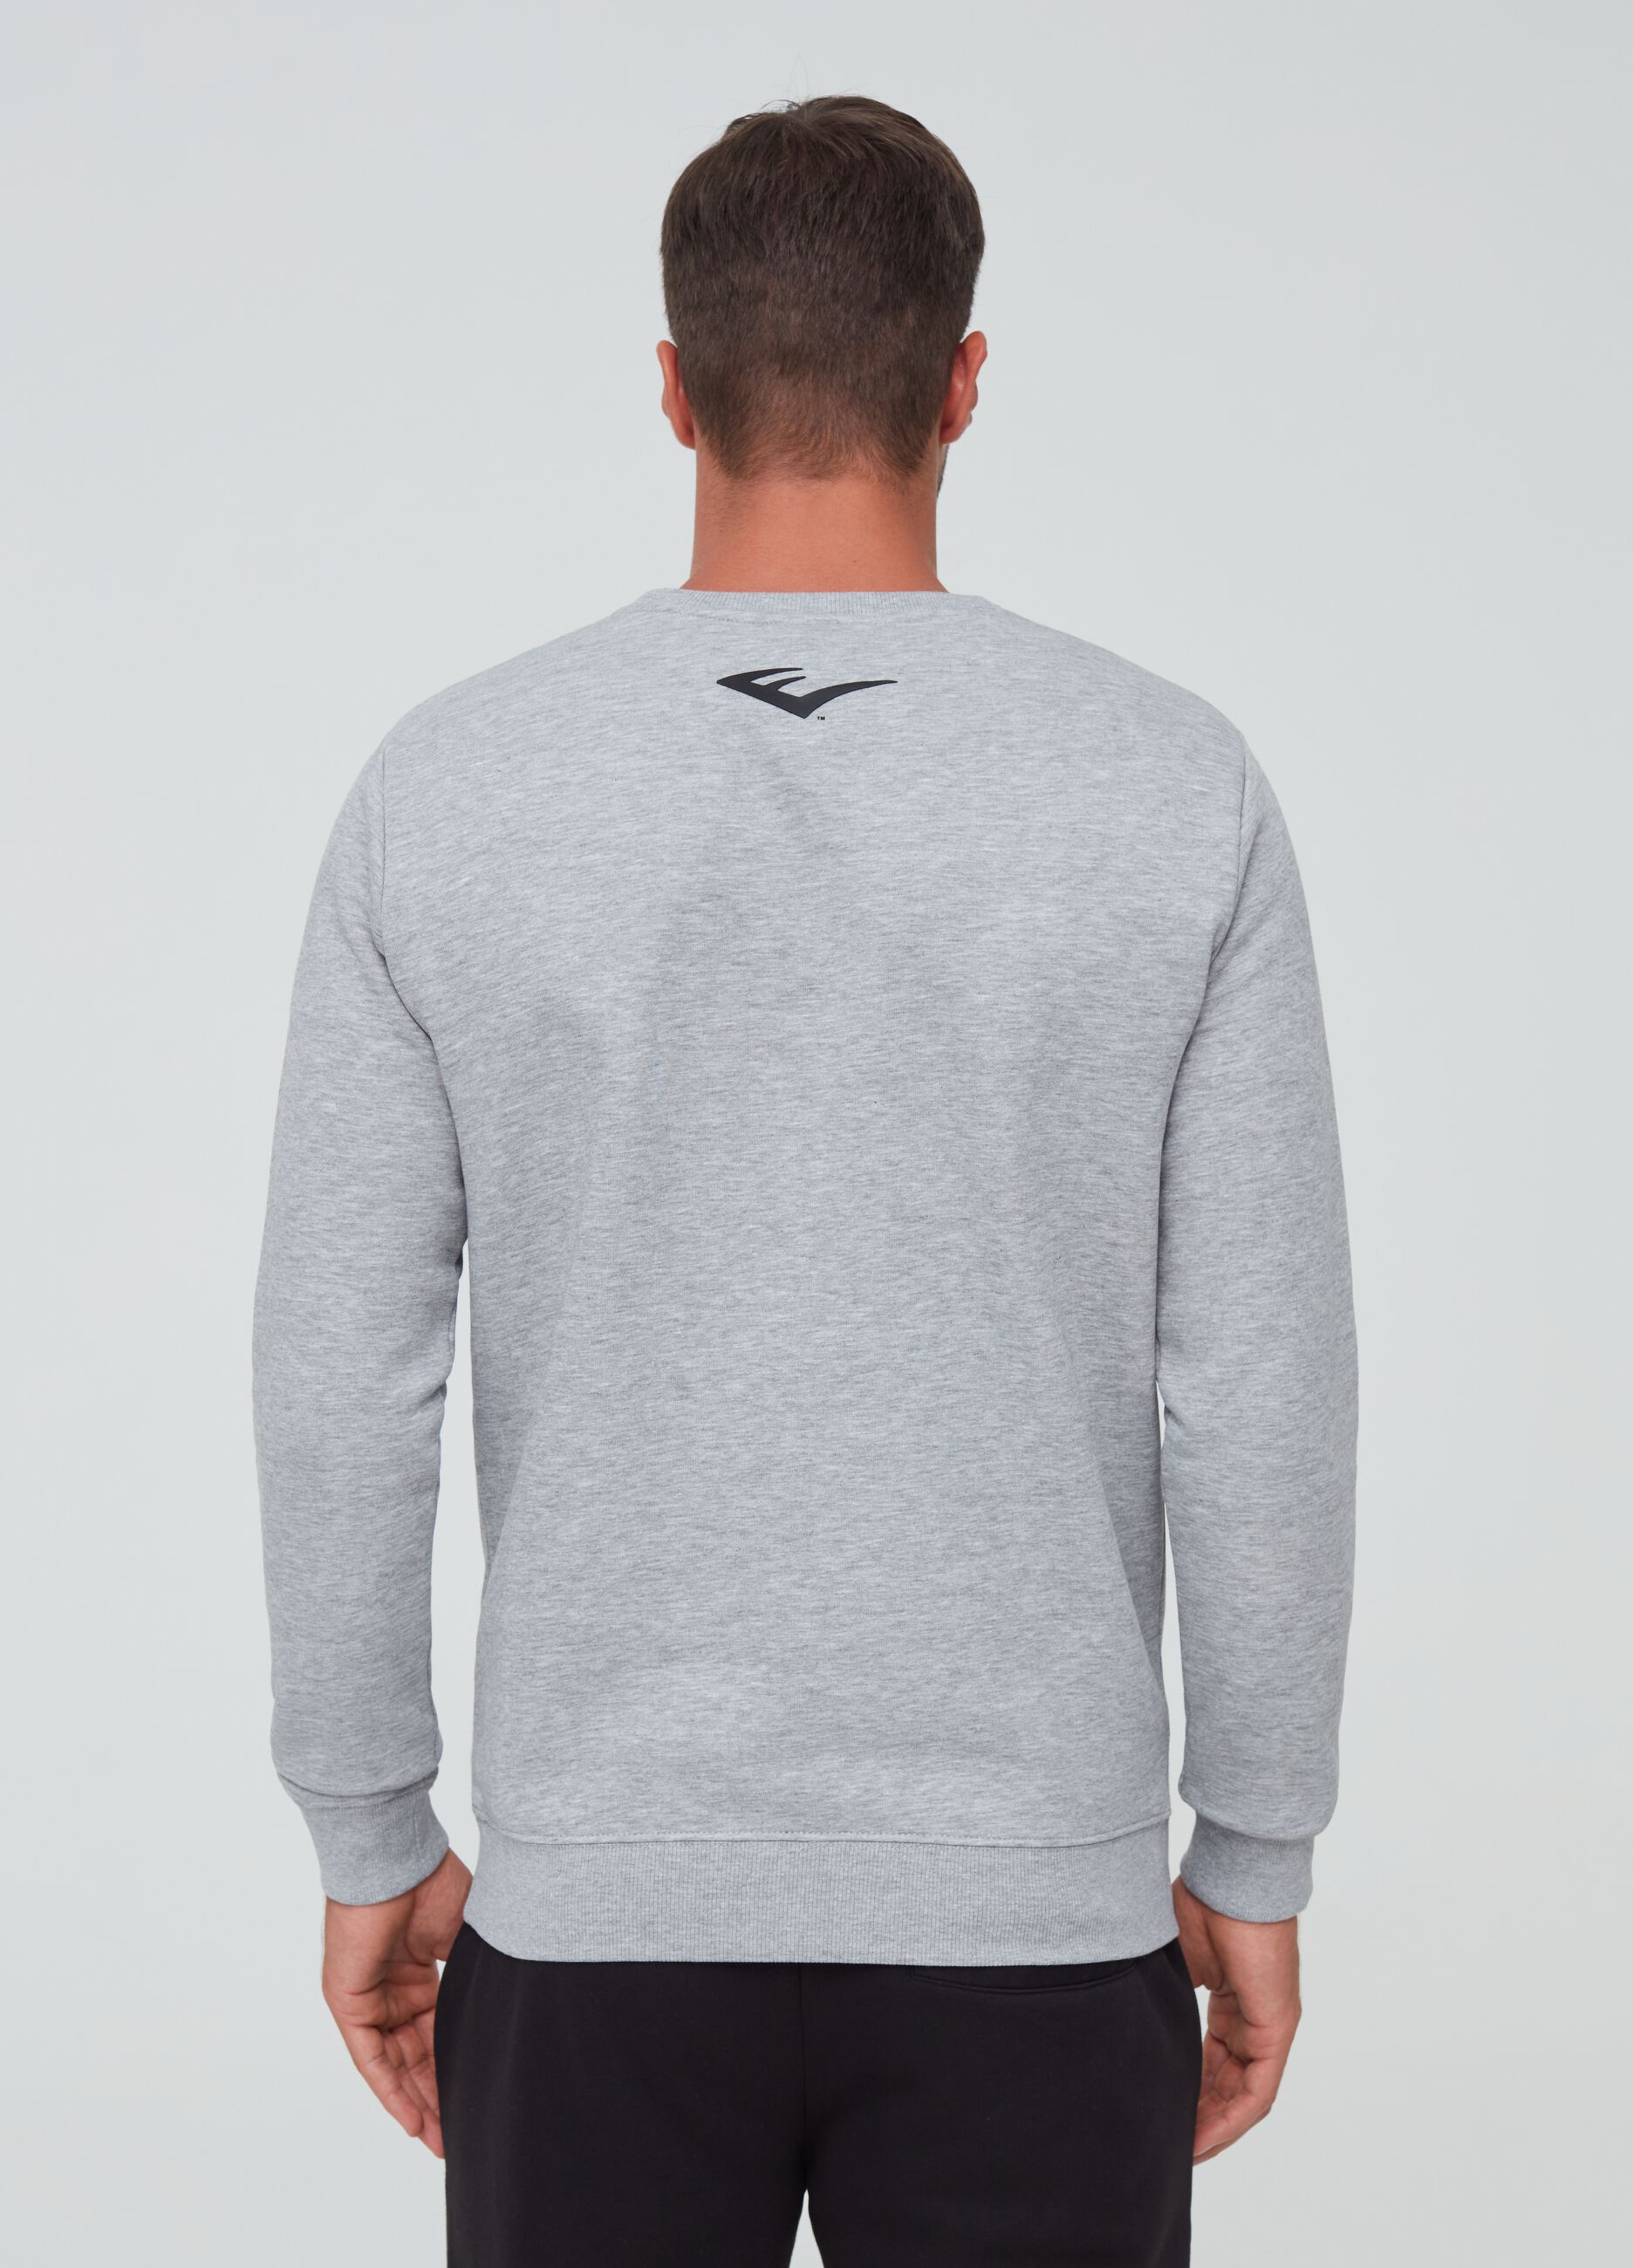 Round neck sweatshirt with Everlast print